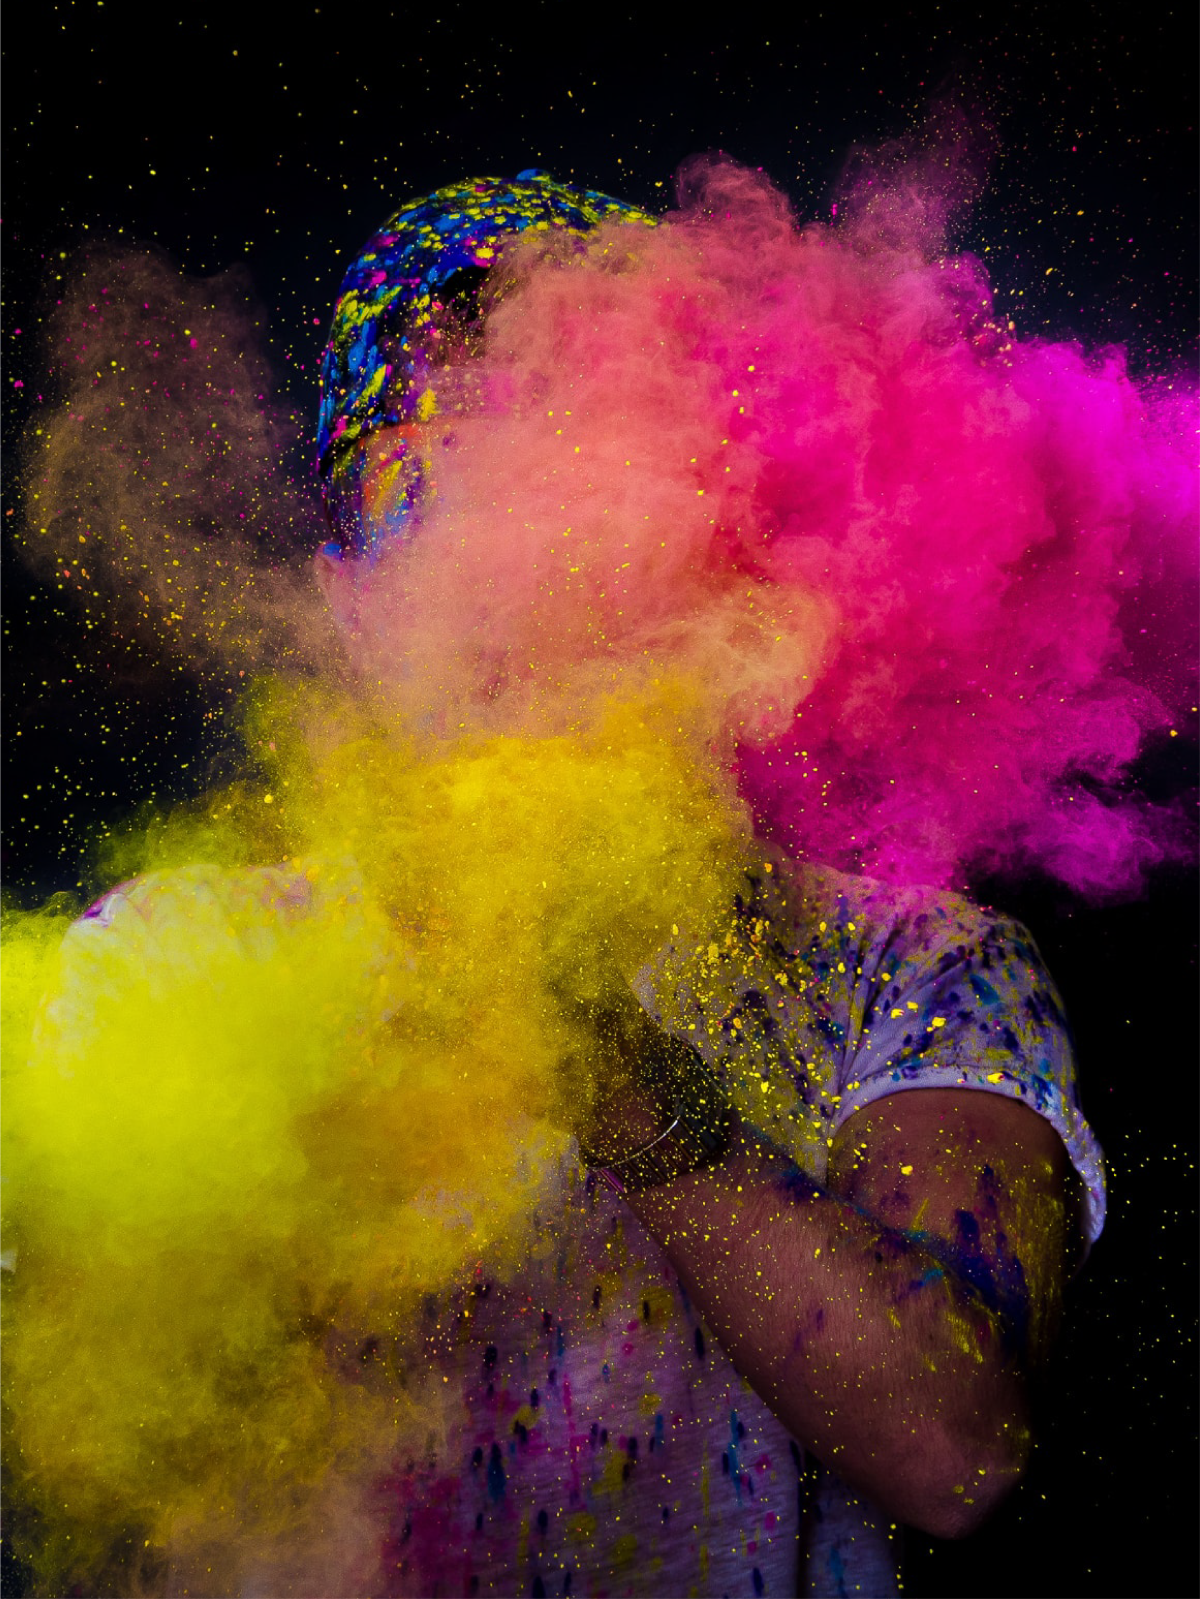 Coloured powder over a person.